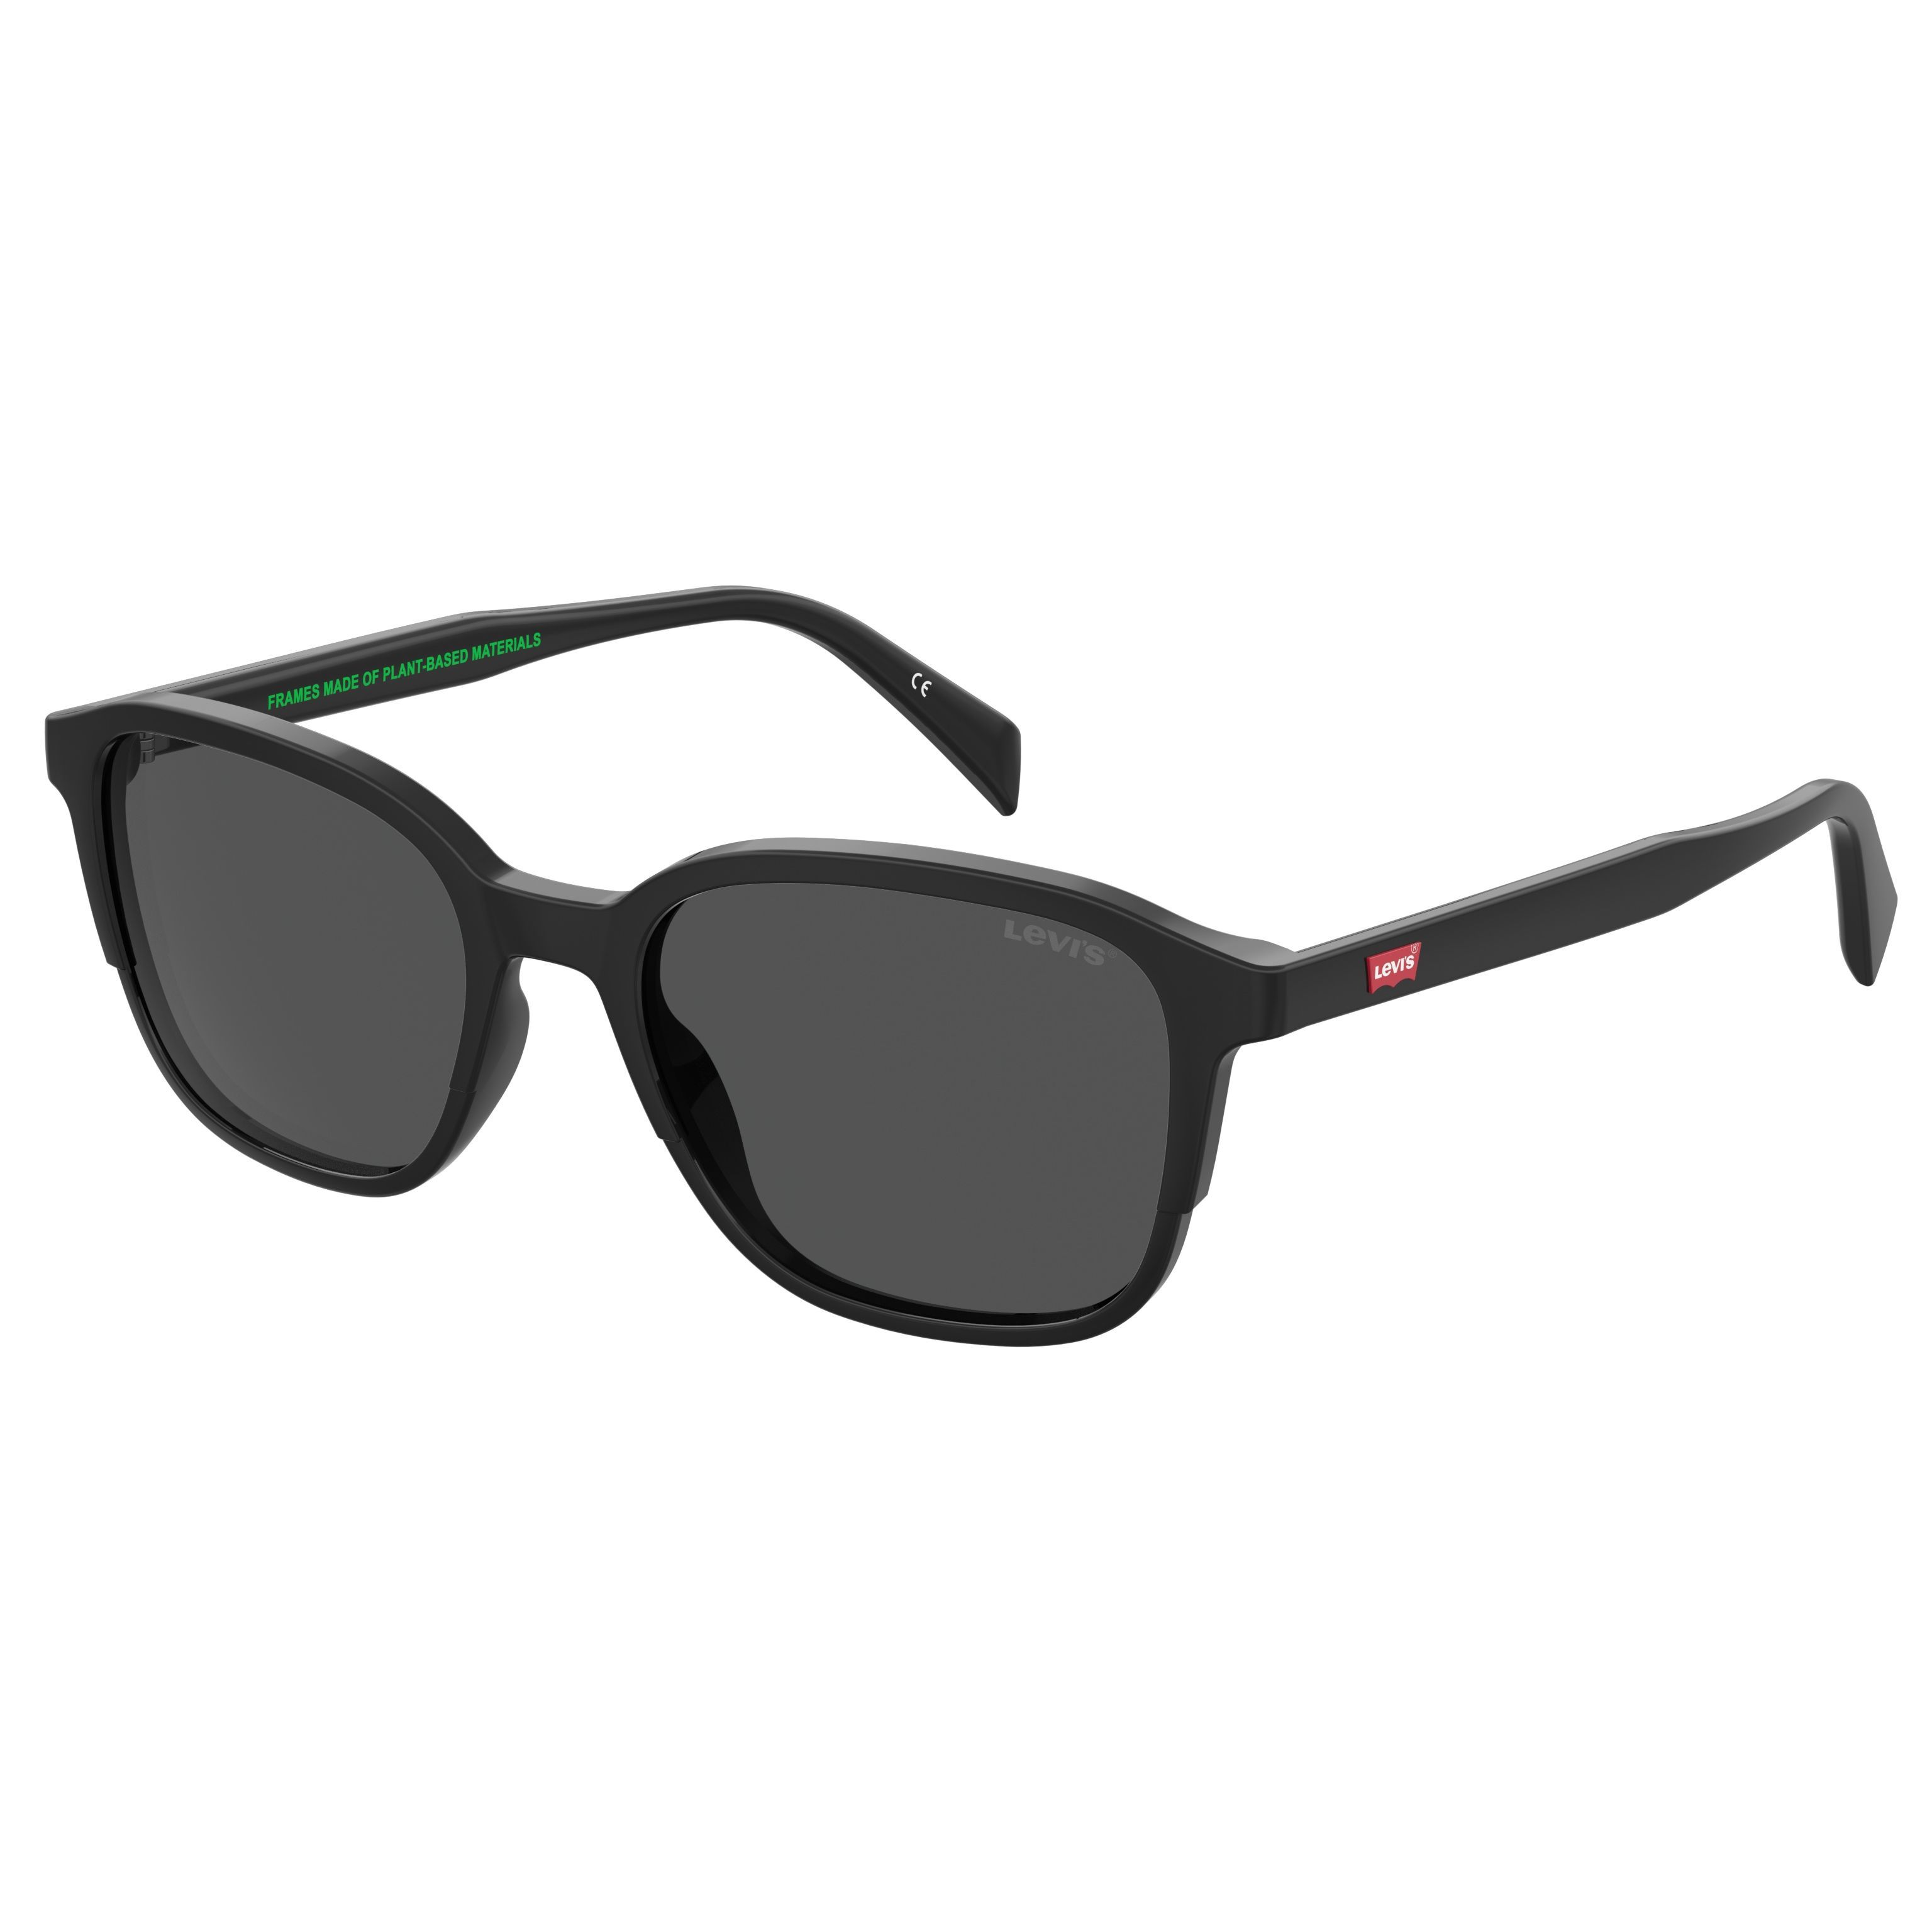 LV 5030 S Square Sunglasses 807 IR - size 53